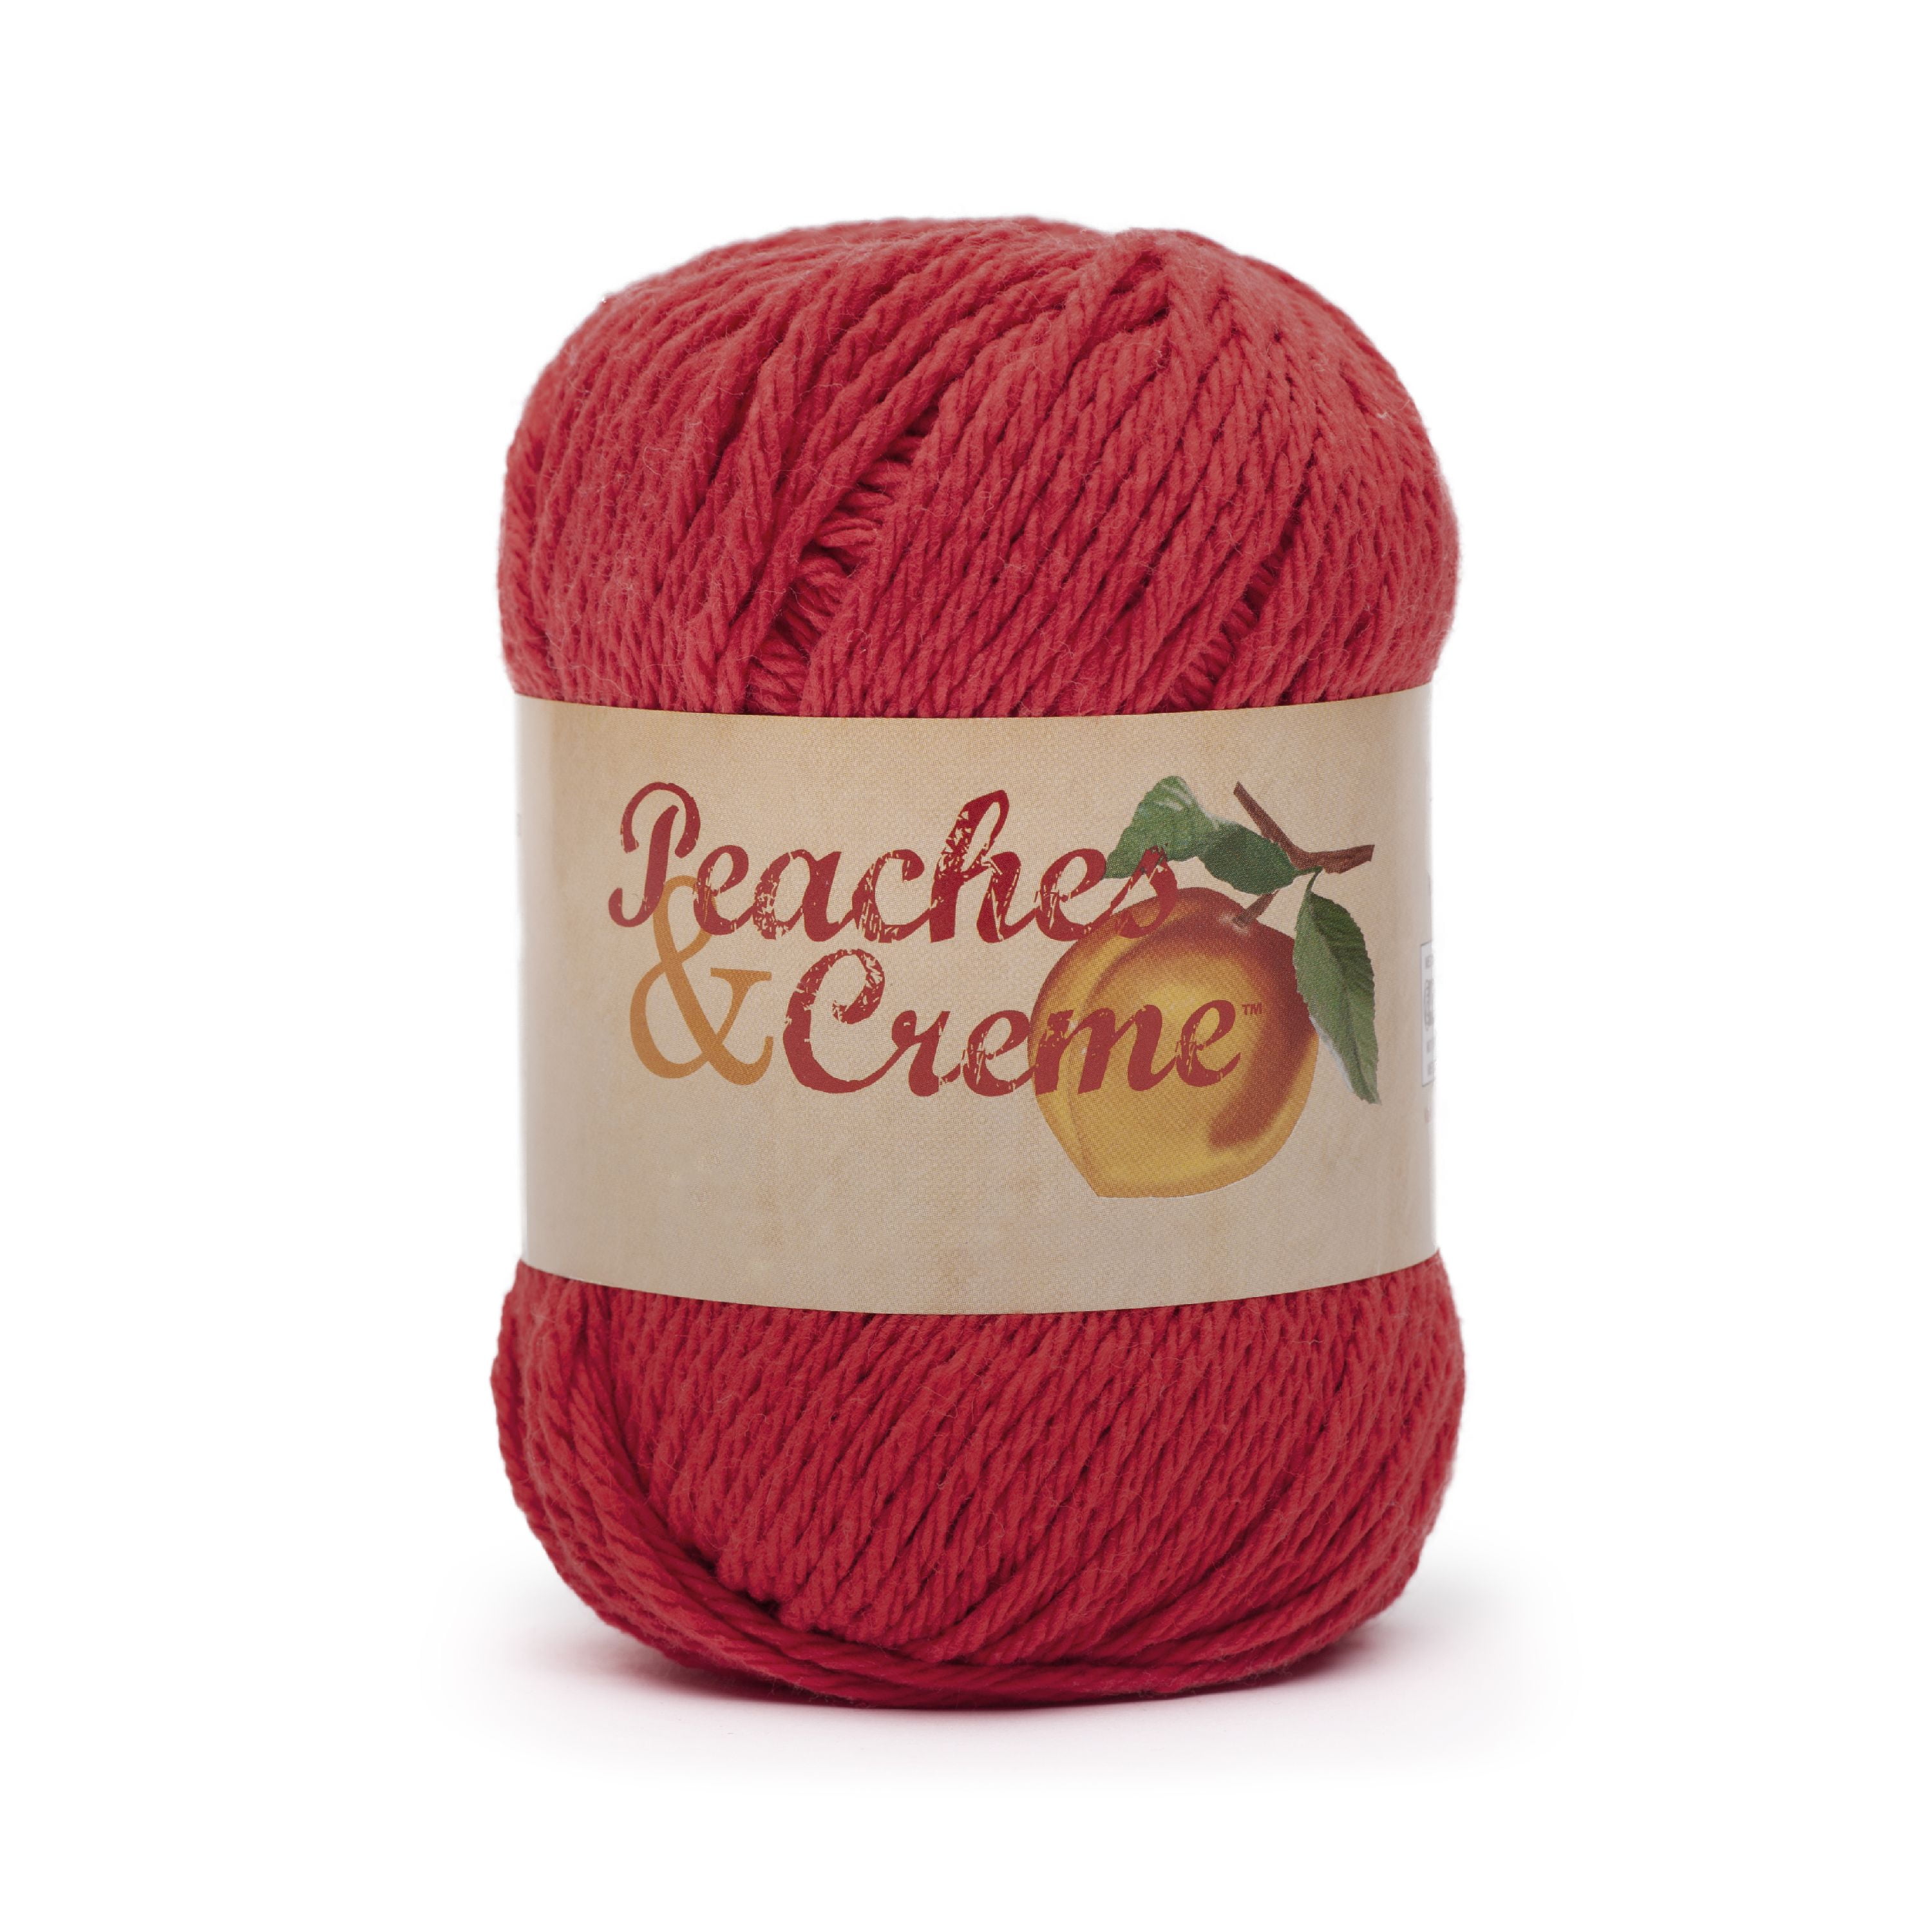 Peaches & Creme Solid 4 Medium Cotton Yarn, Red 2.5oz/70.9g, 120 Yards